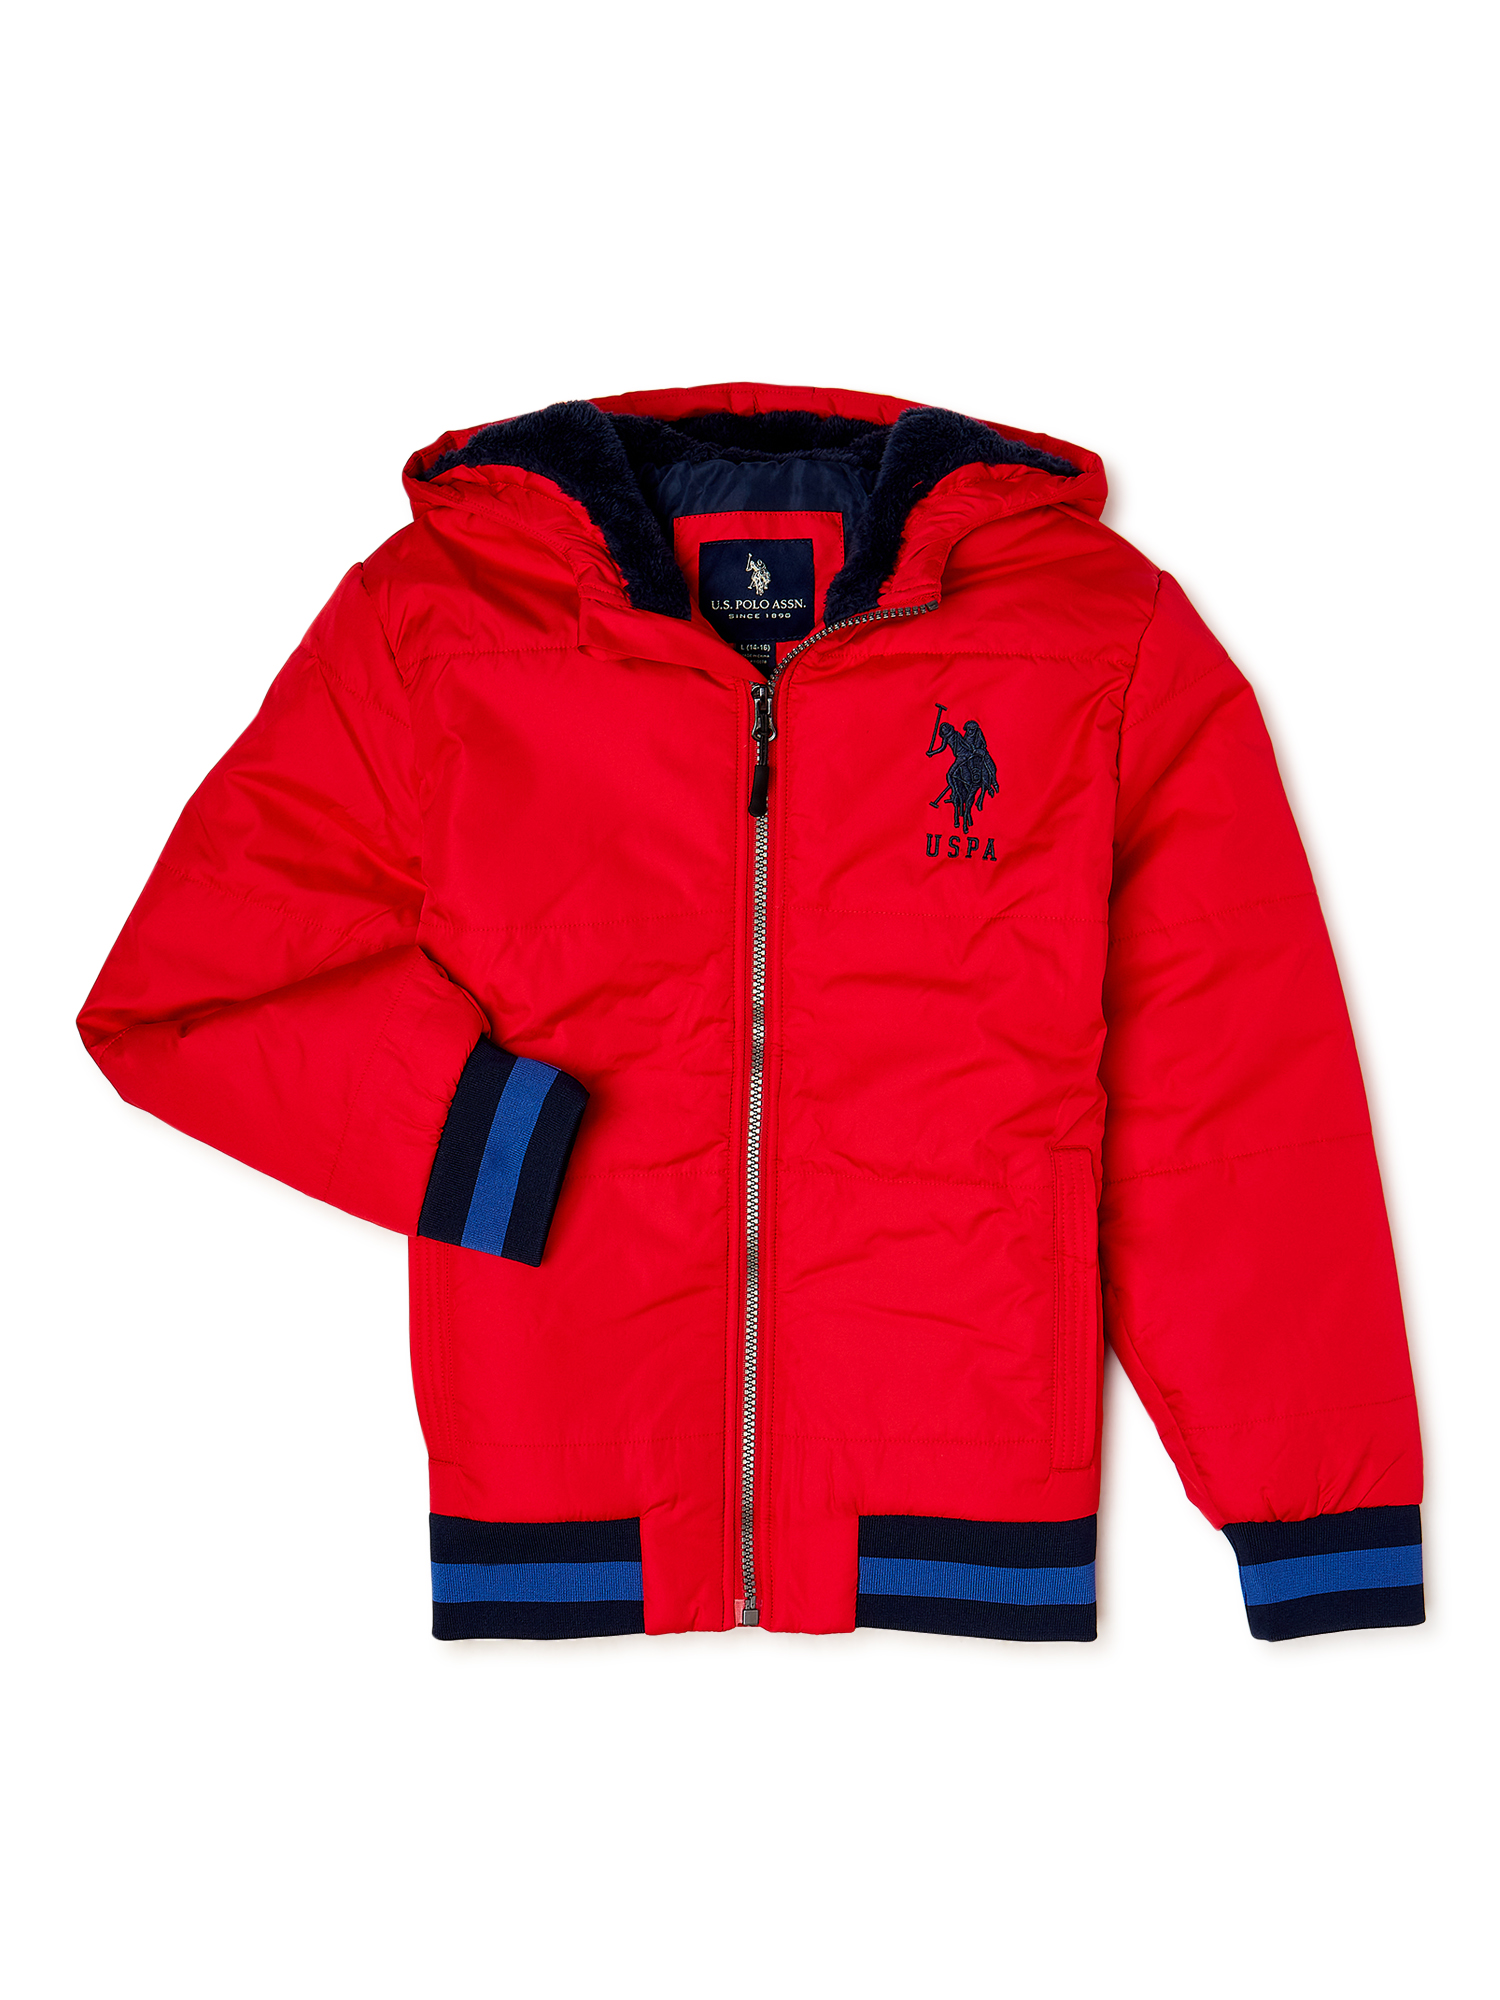 U.S. Polo Assn. Boys Varsity Puffer Jacket, Sizes 8-20 - image 1 of 4